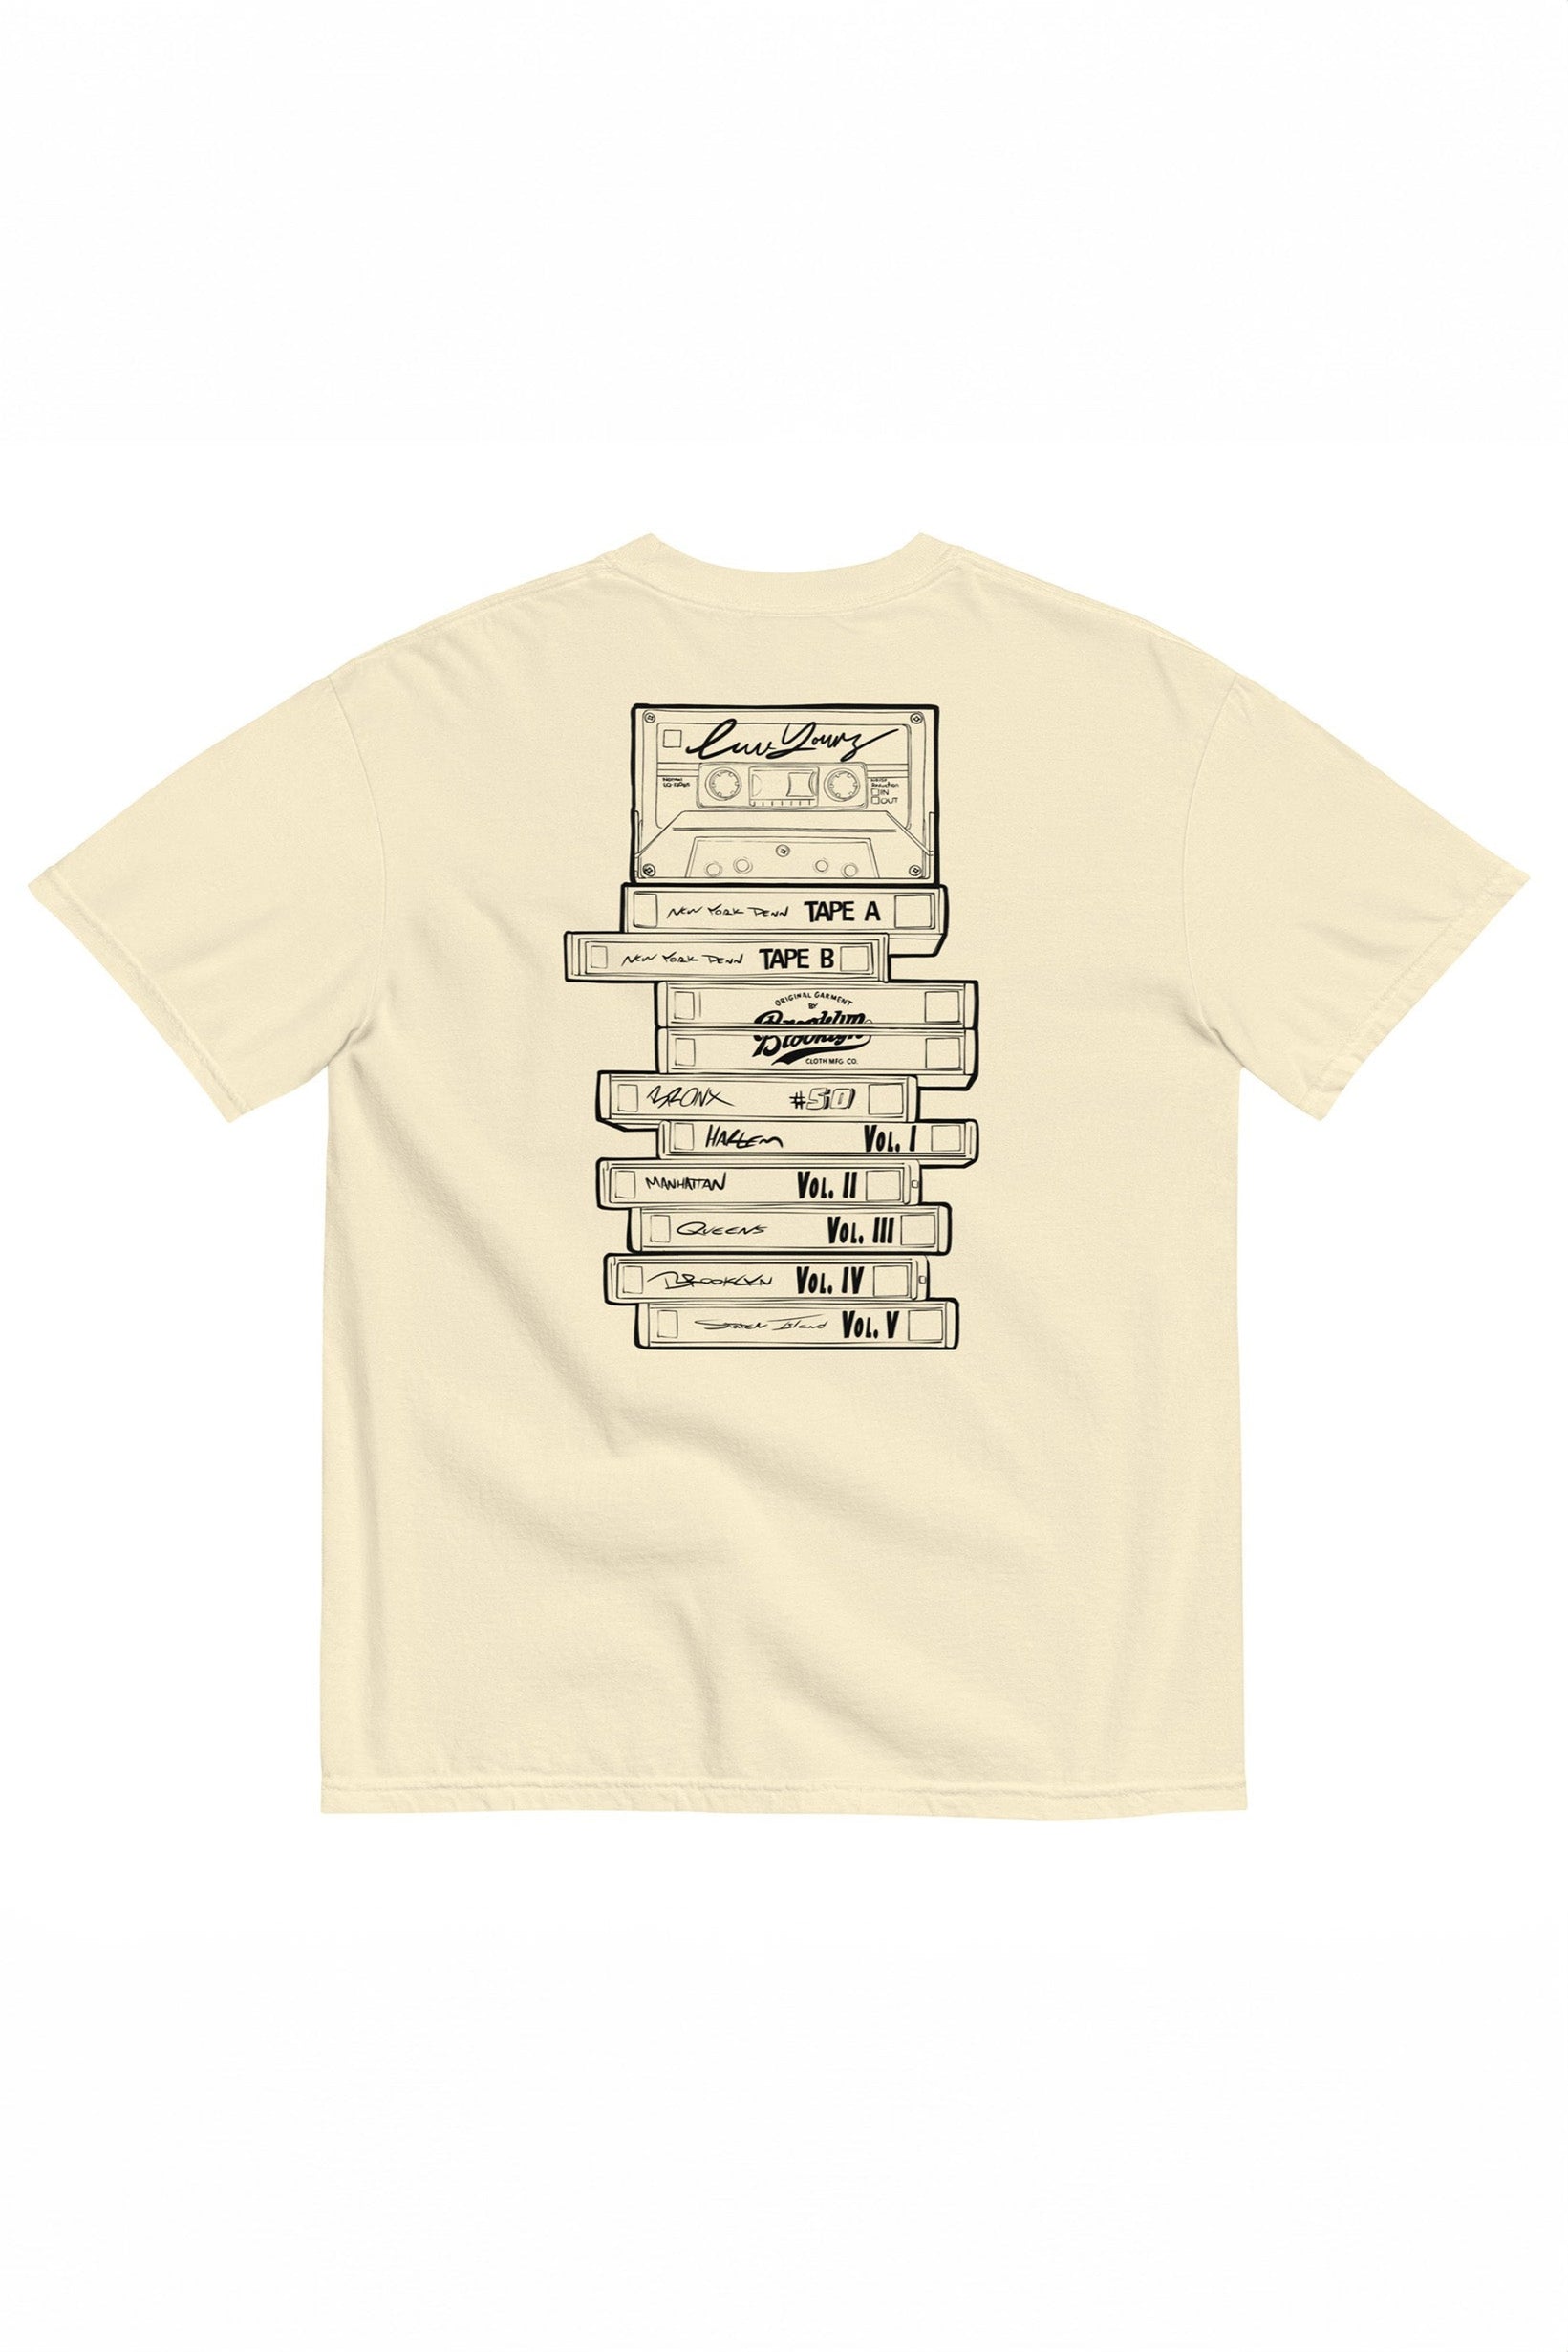 New York Penn x Brooklyn Cloth: Luv Yours Ivory T-Shirt